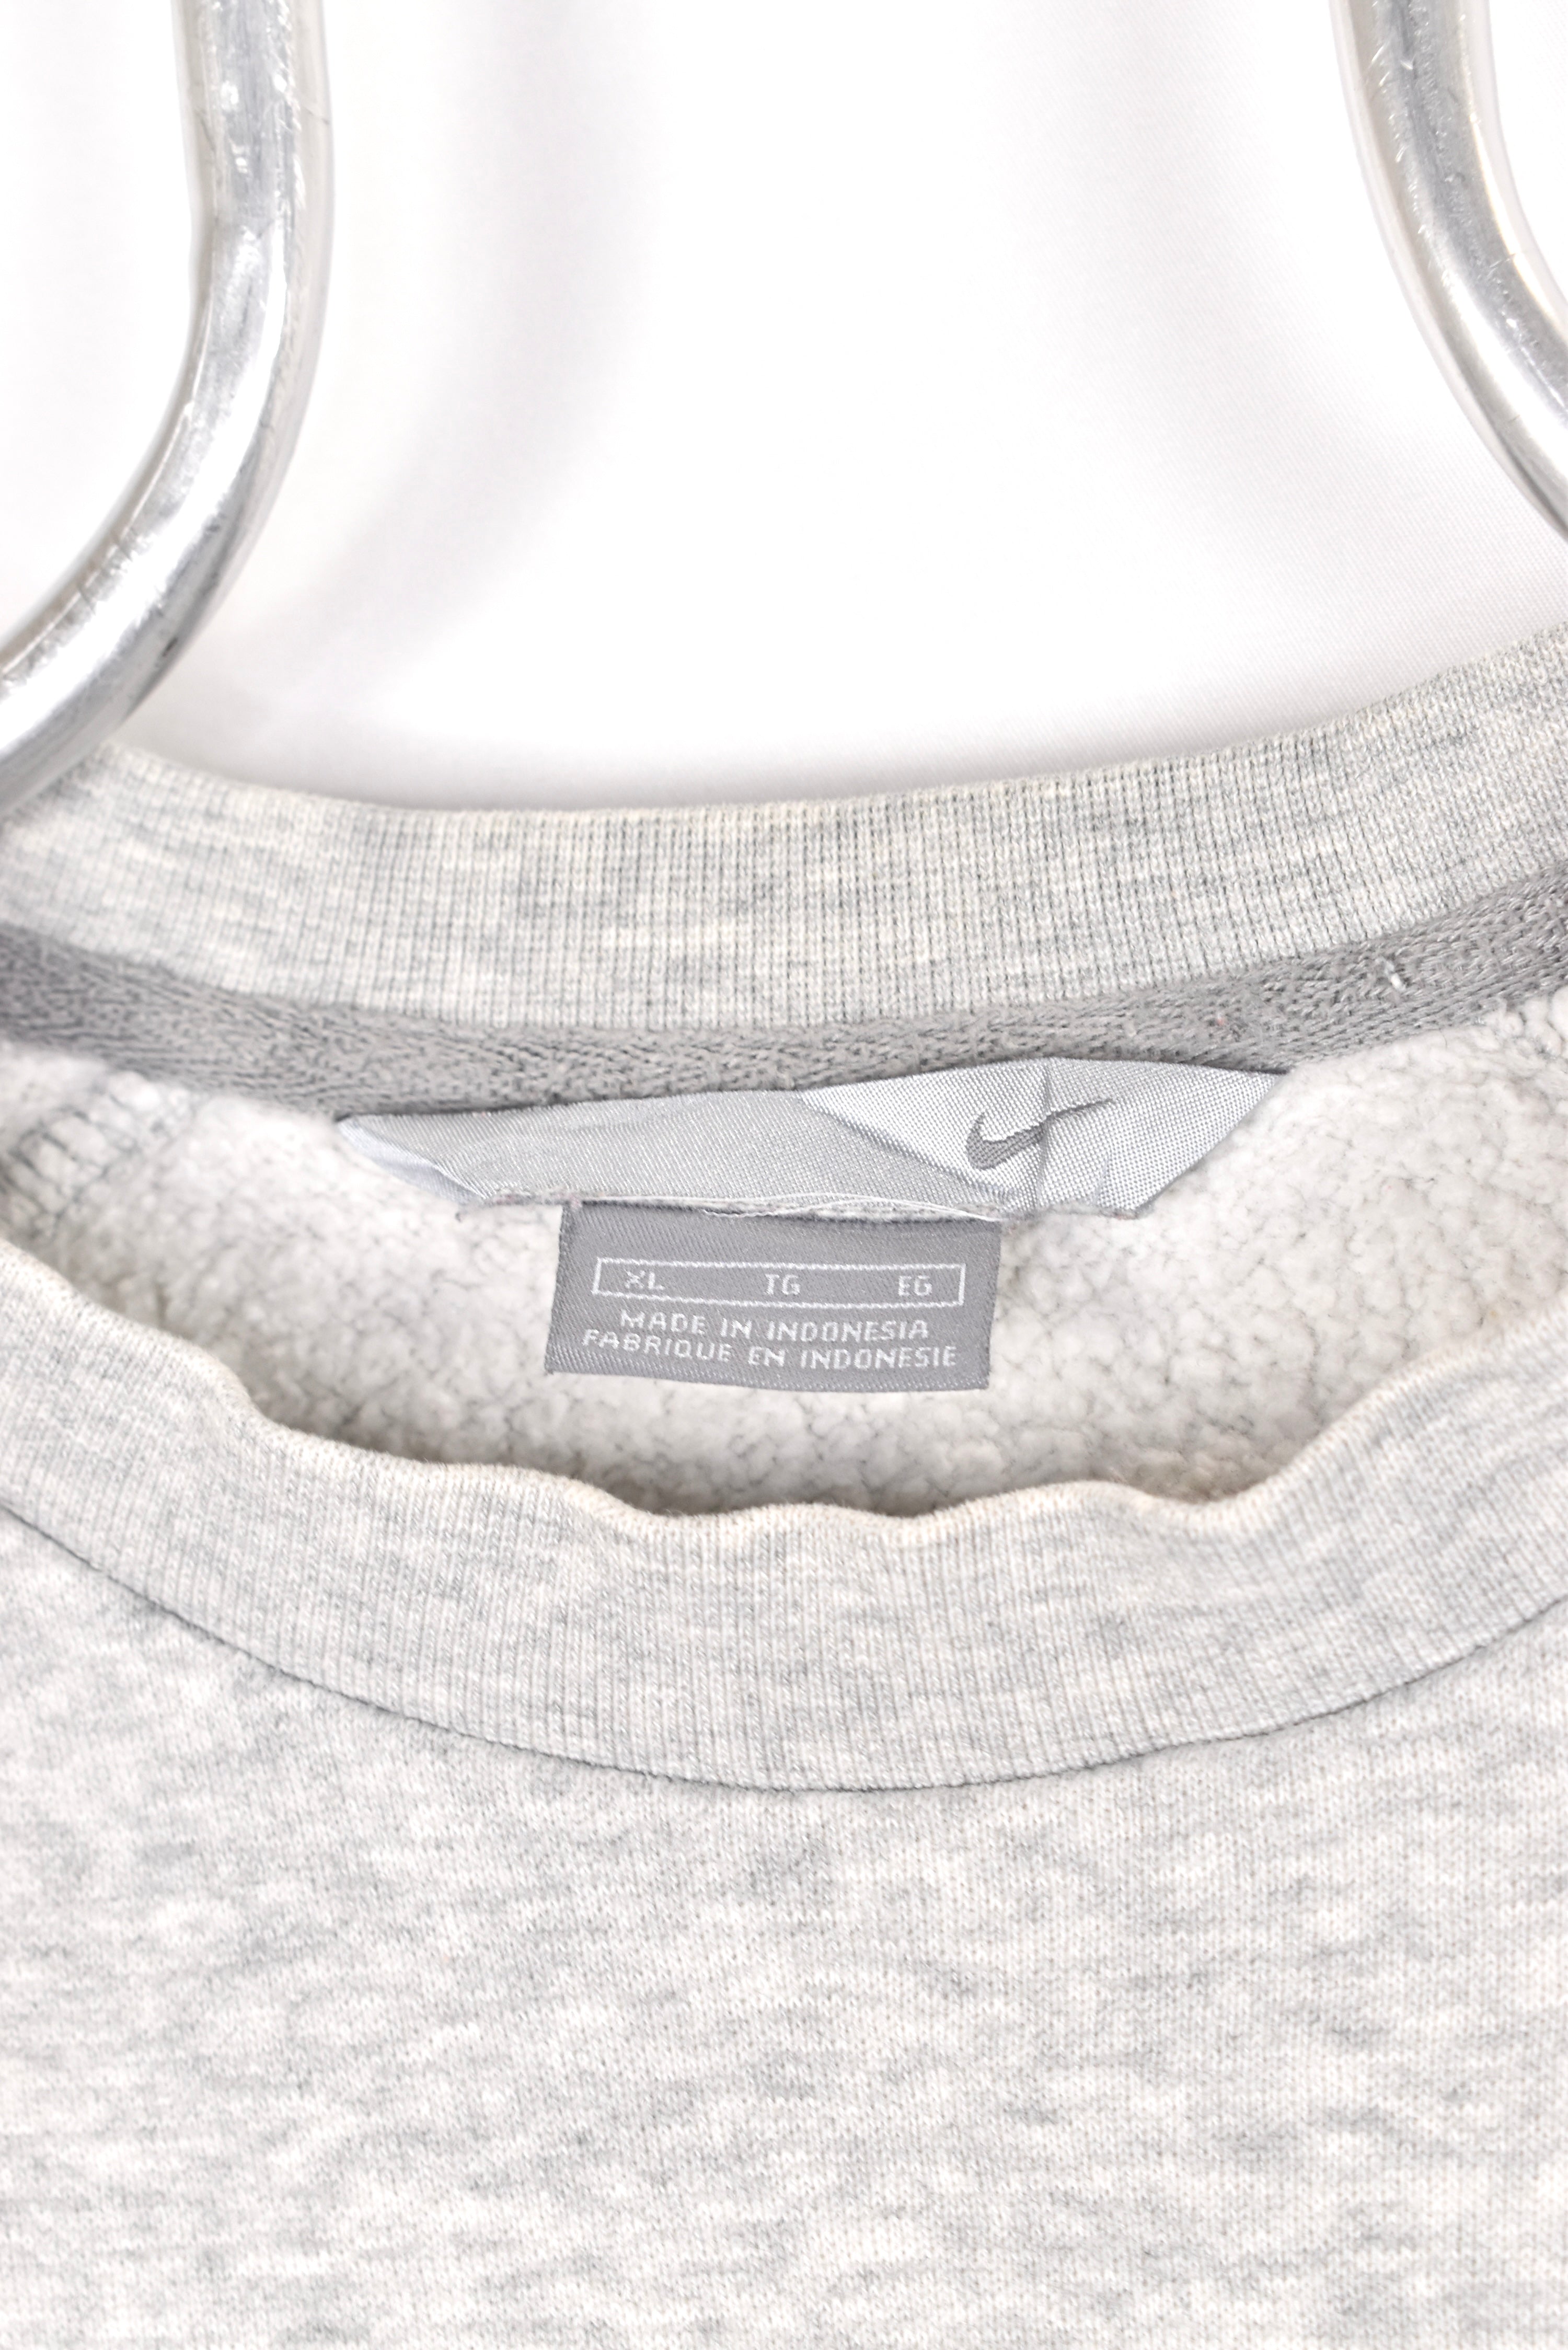 Vintage Nike sweatshirt, grey embroidered crewneck - AU XL NIKE